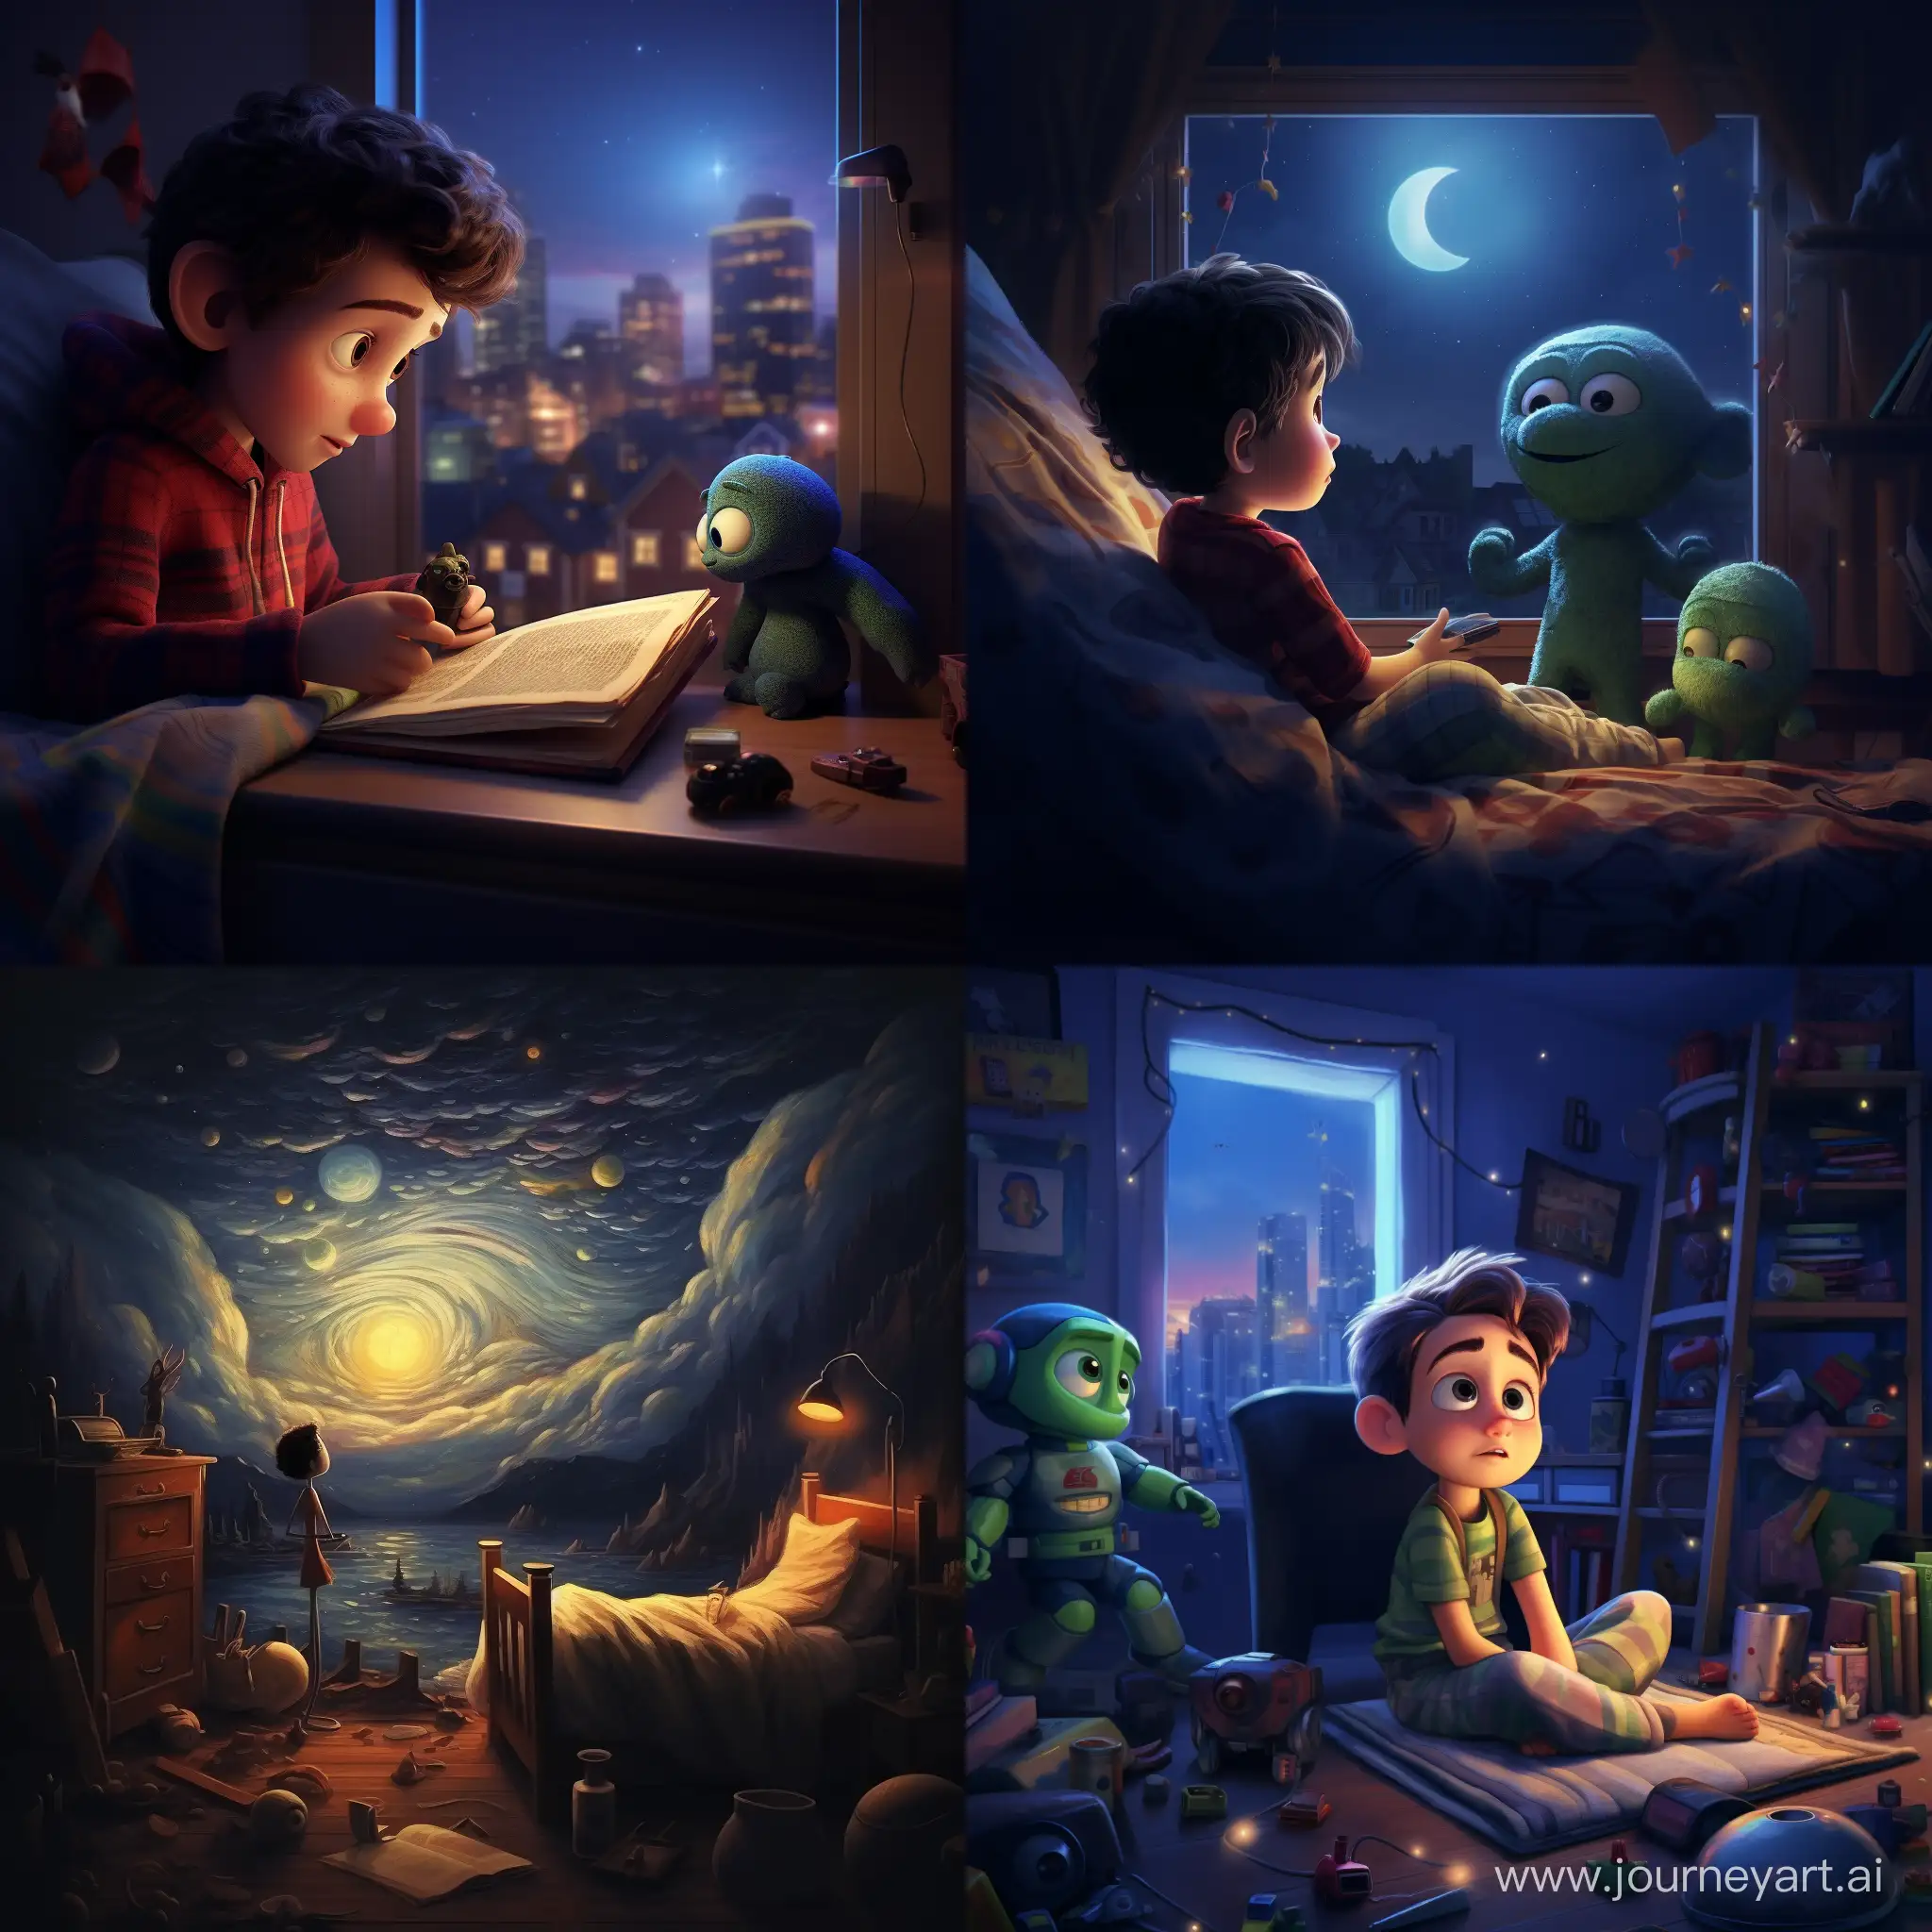 night in Pixar style